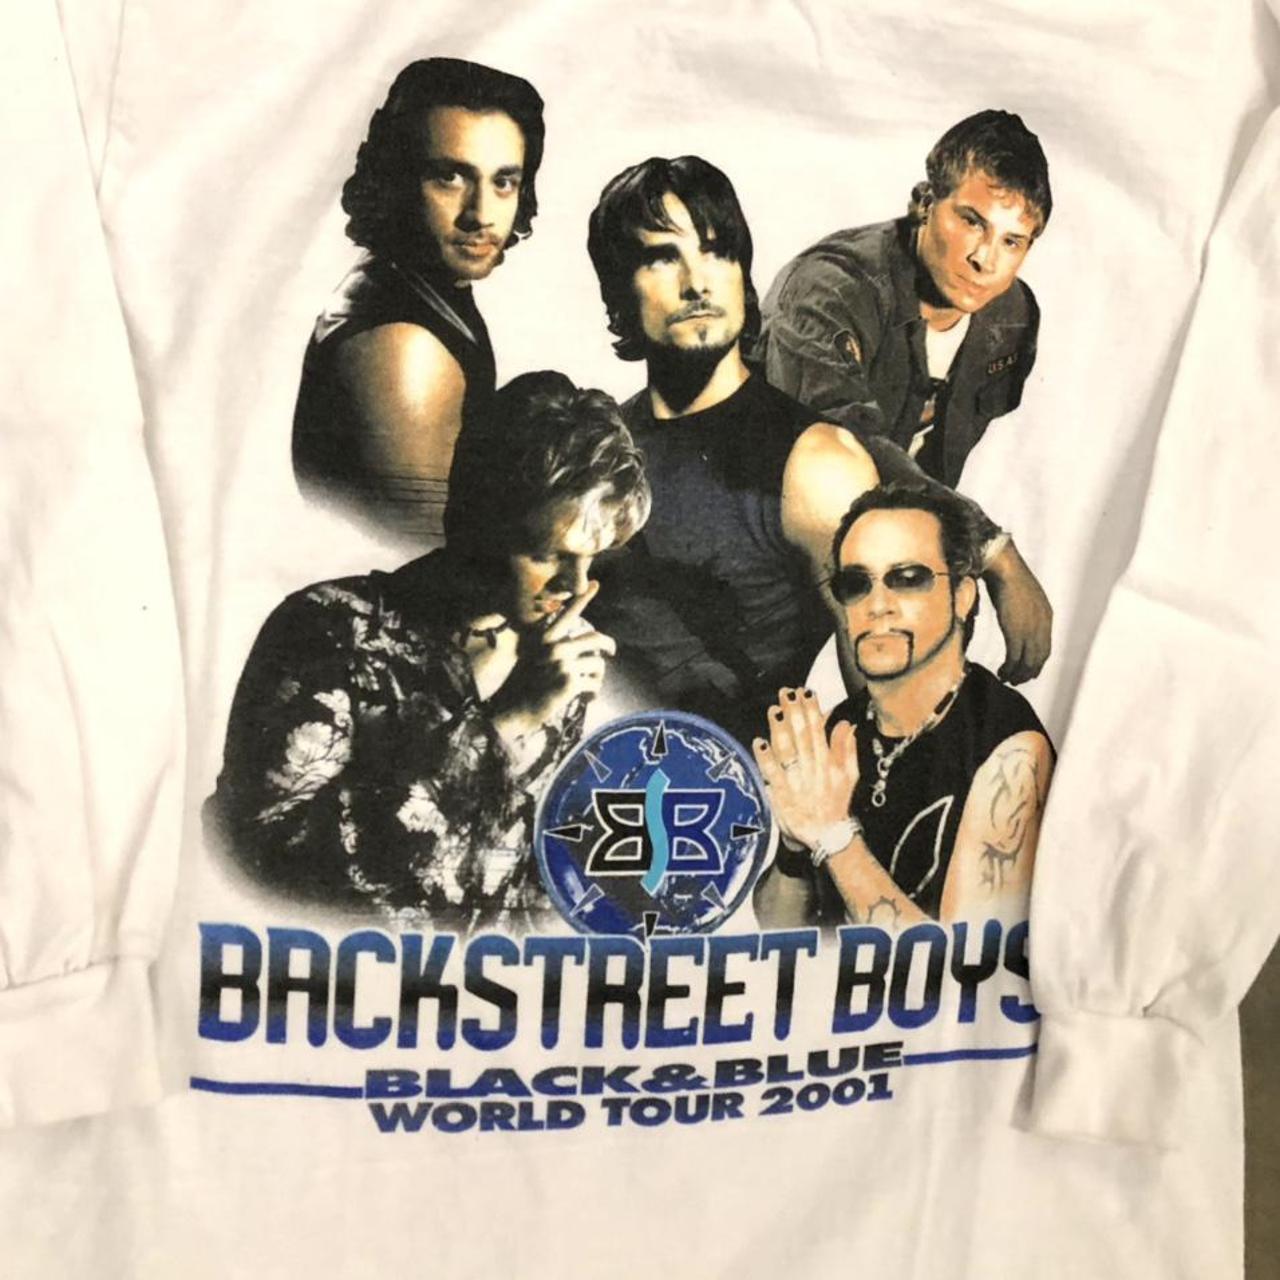 Vintage Backstreet Boys Shirt Concert Black and Blue